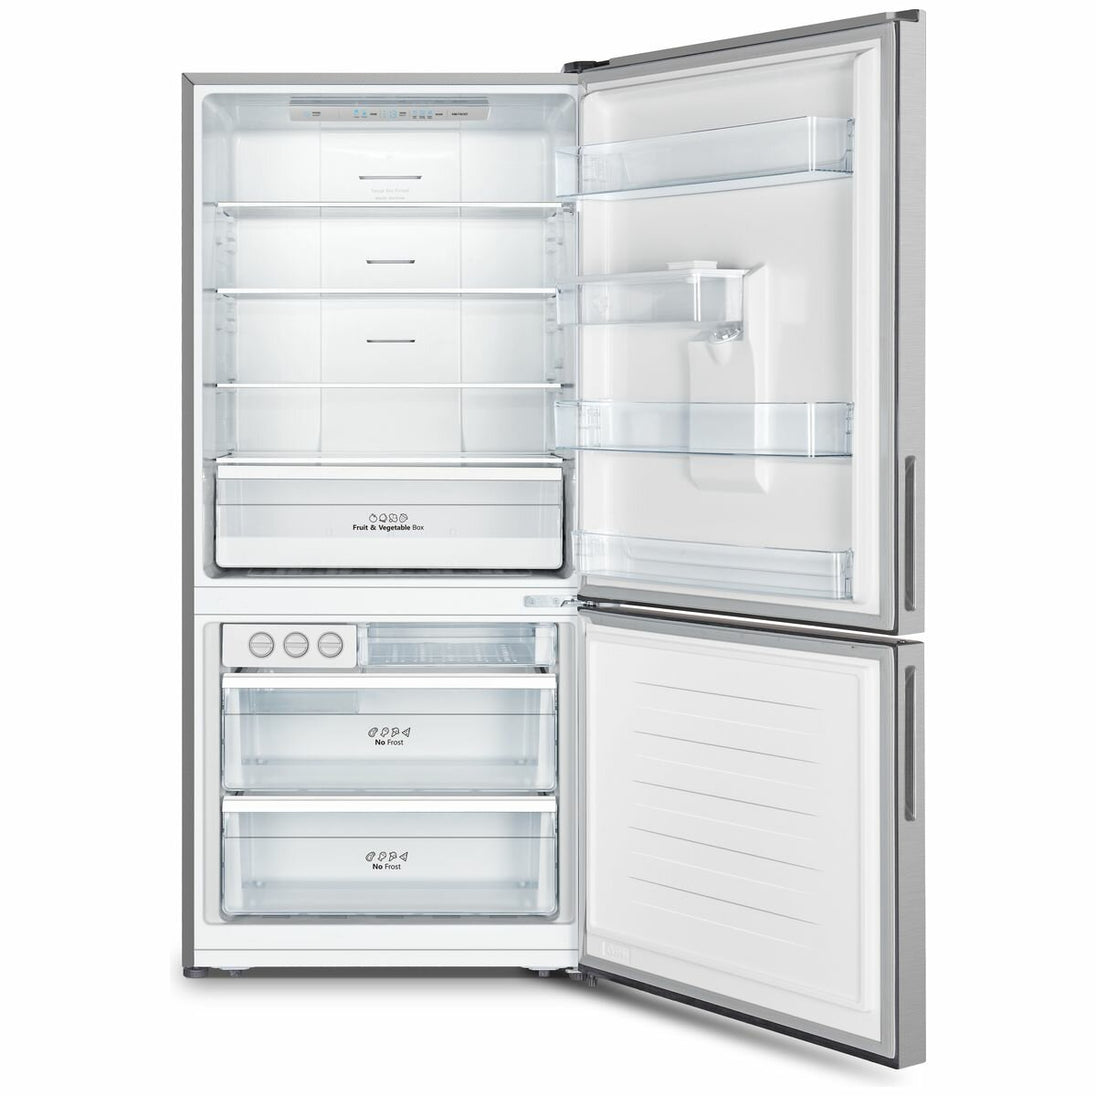 hisense-482l-pureflat-bottom-mount-refrigerator-hrbm482sw-3-c4a5274d-high